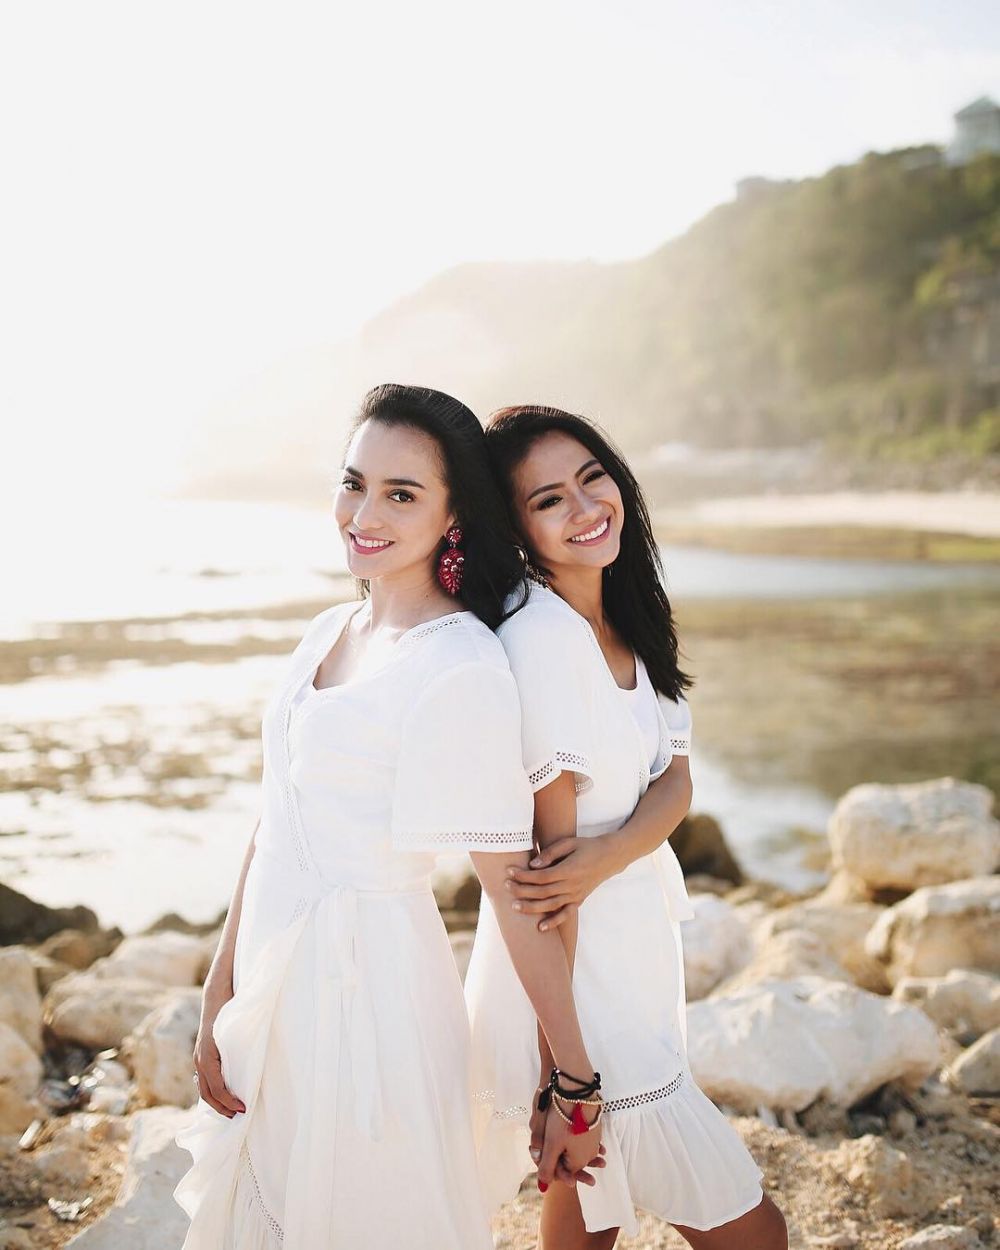 10 Potret kompaknya Ririn Ekawati & Rini Yulianti, sister goal banget